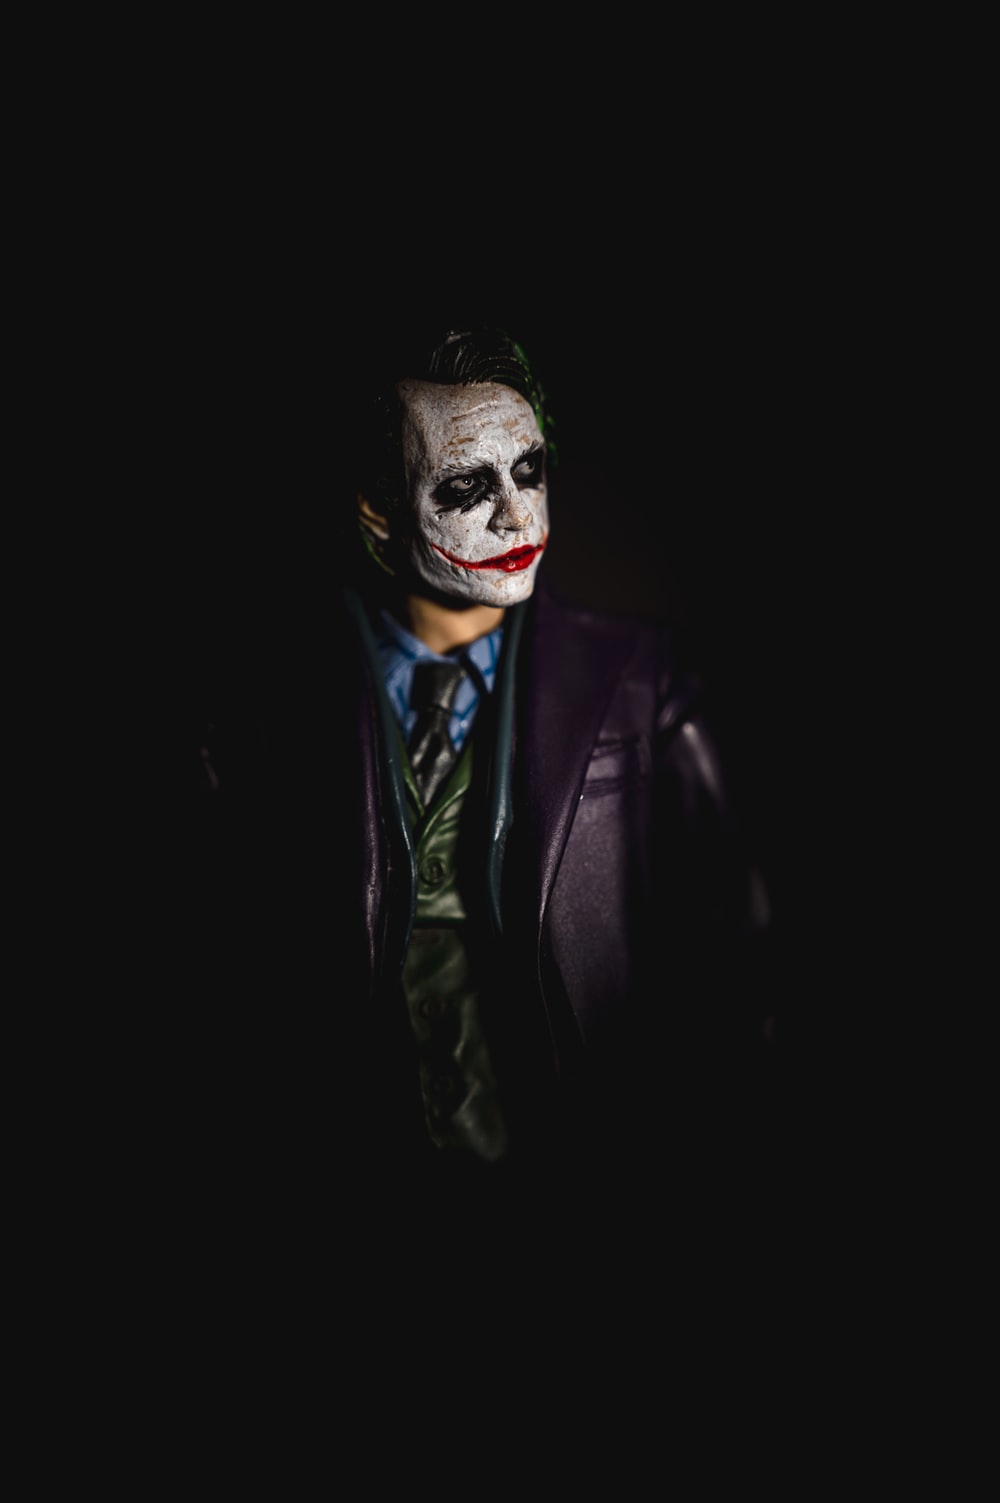 Joker Mask Wallpaper Download [HD]. Download Free Image